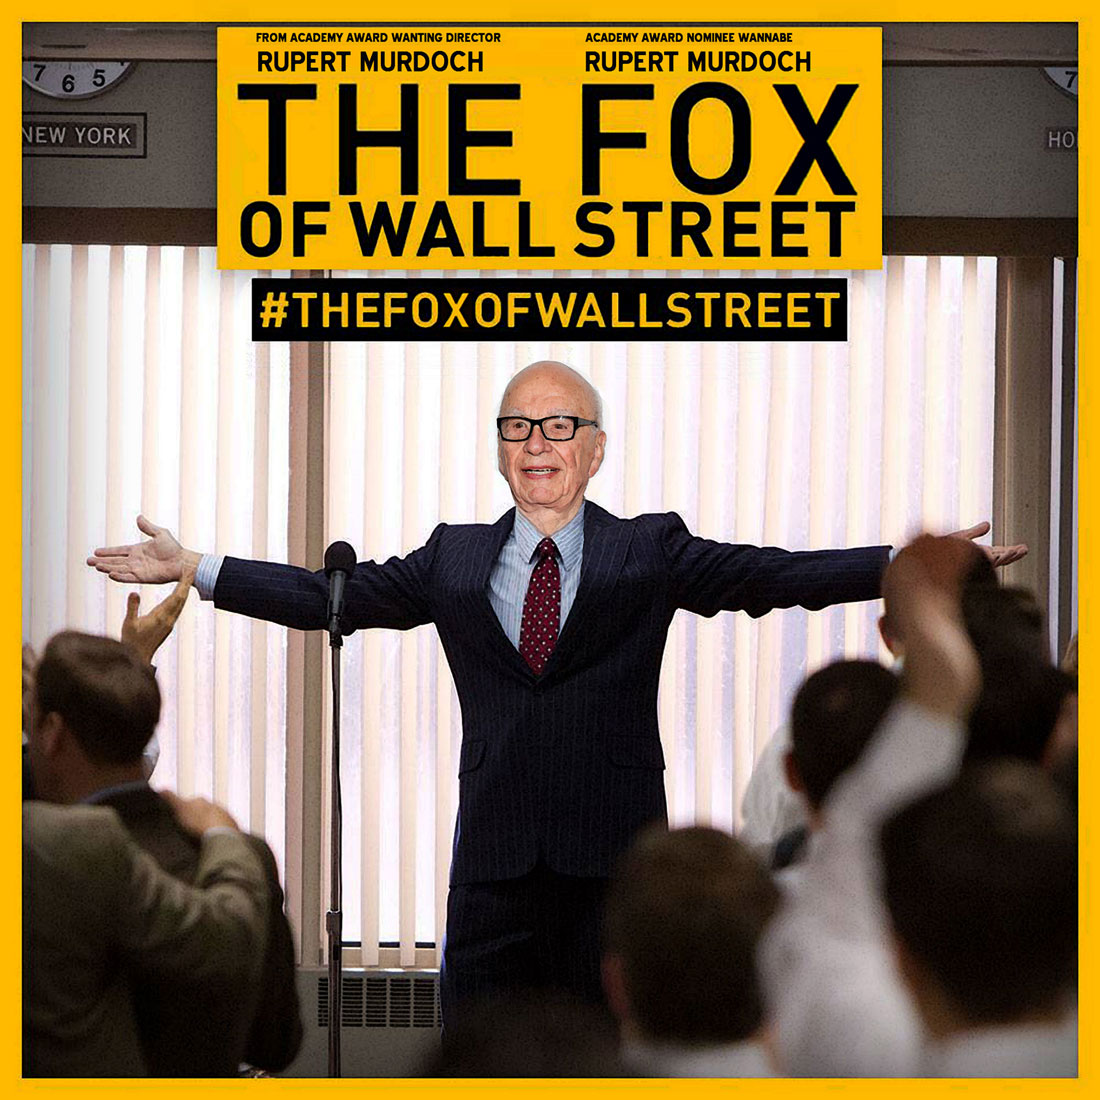 THE FOX OF WALL STREET